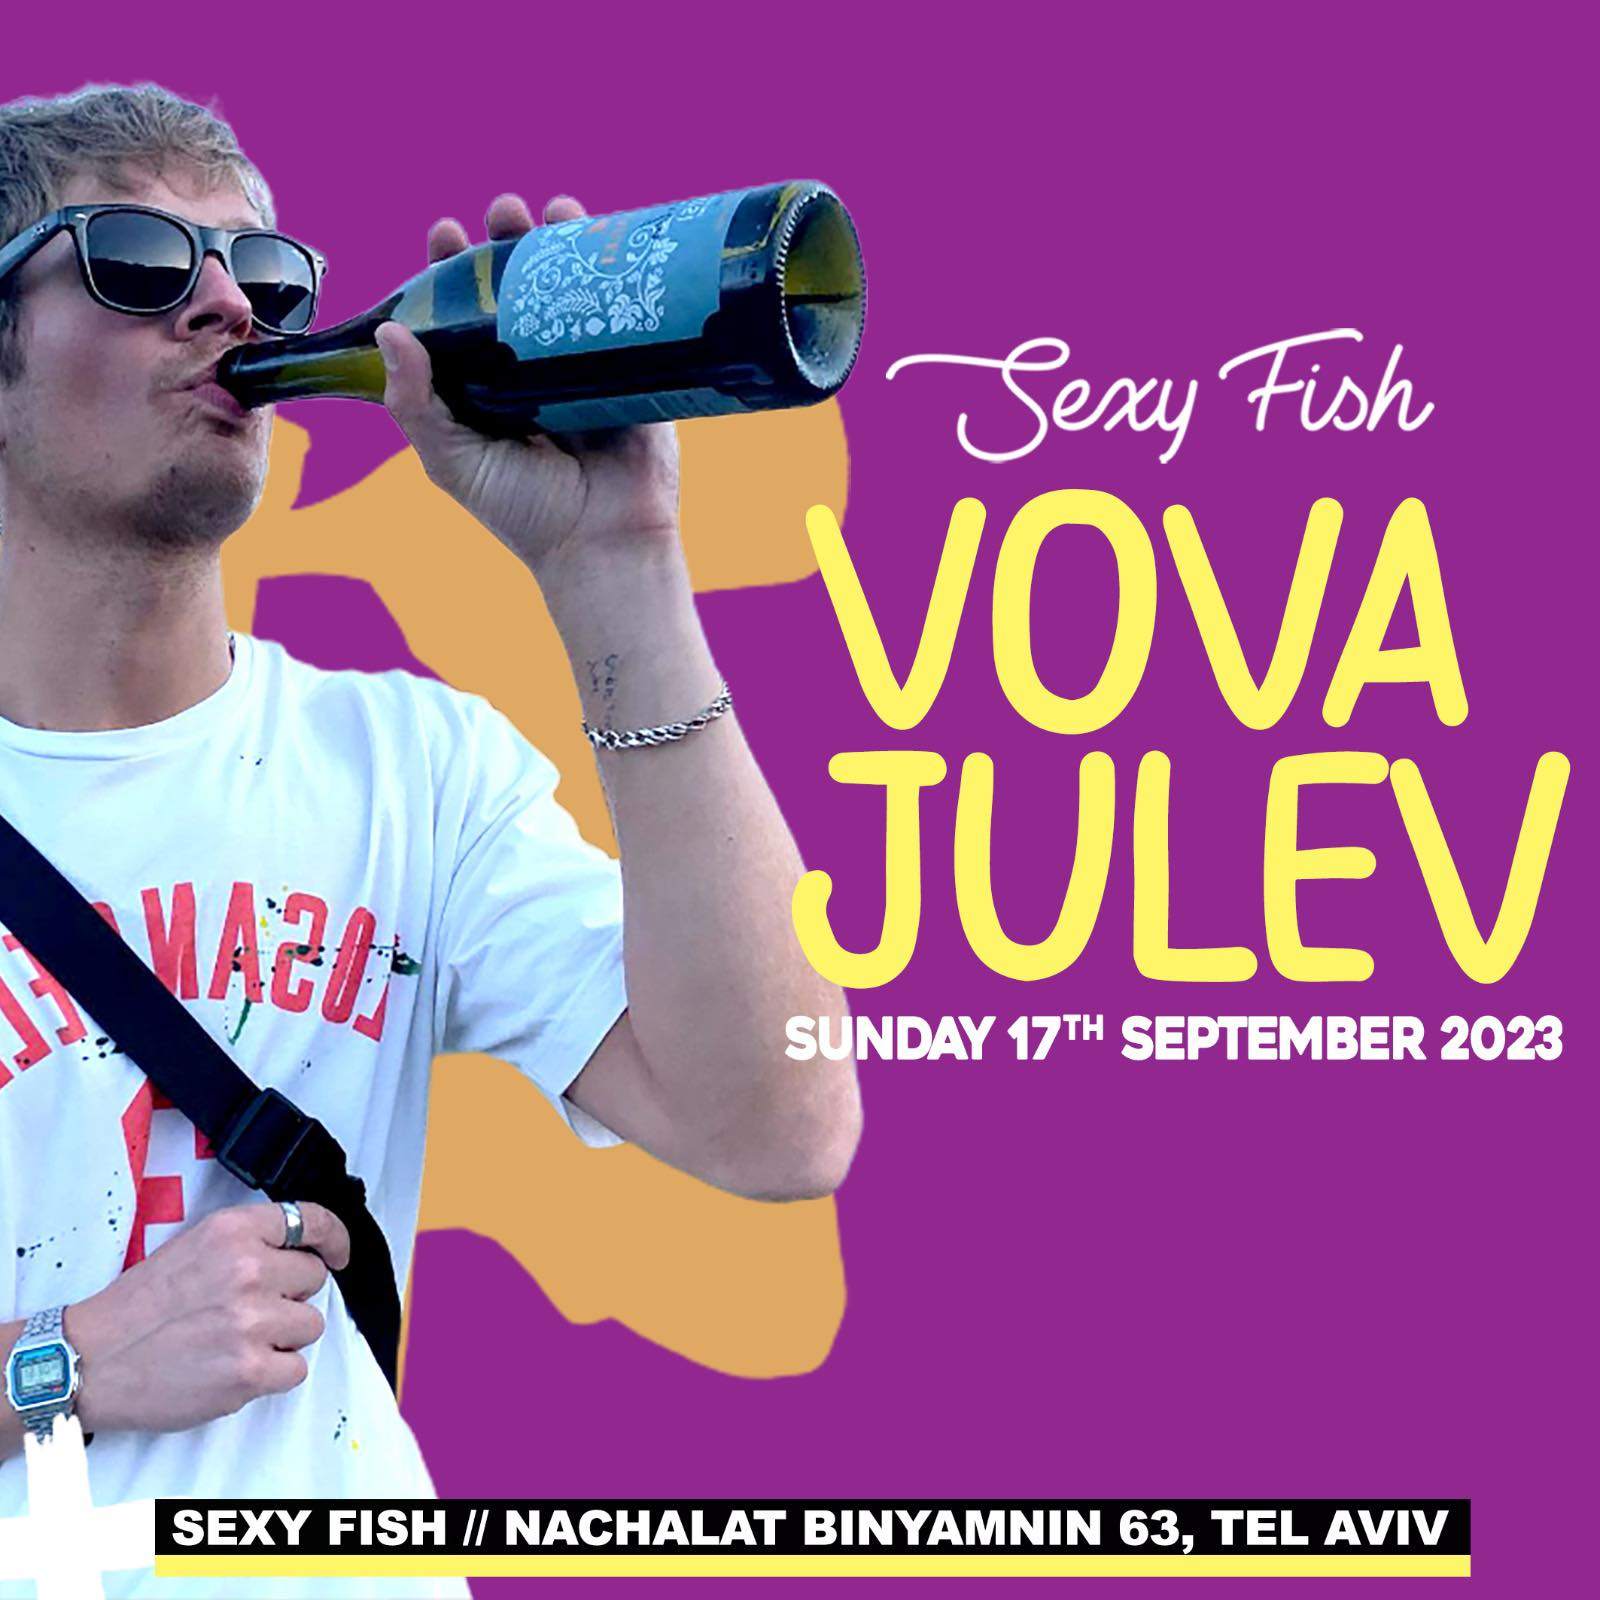 Sexy Fish with Vova Julev - フライヤー表